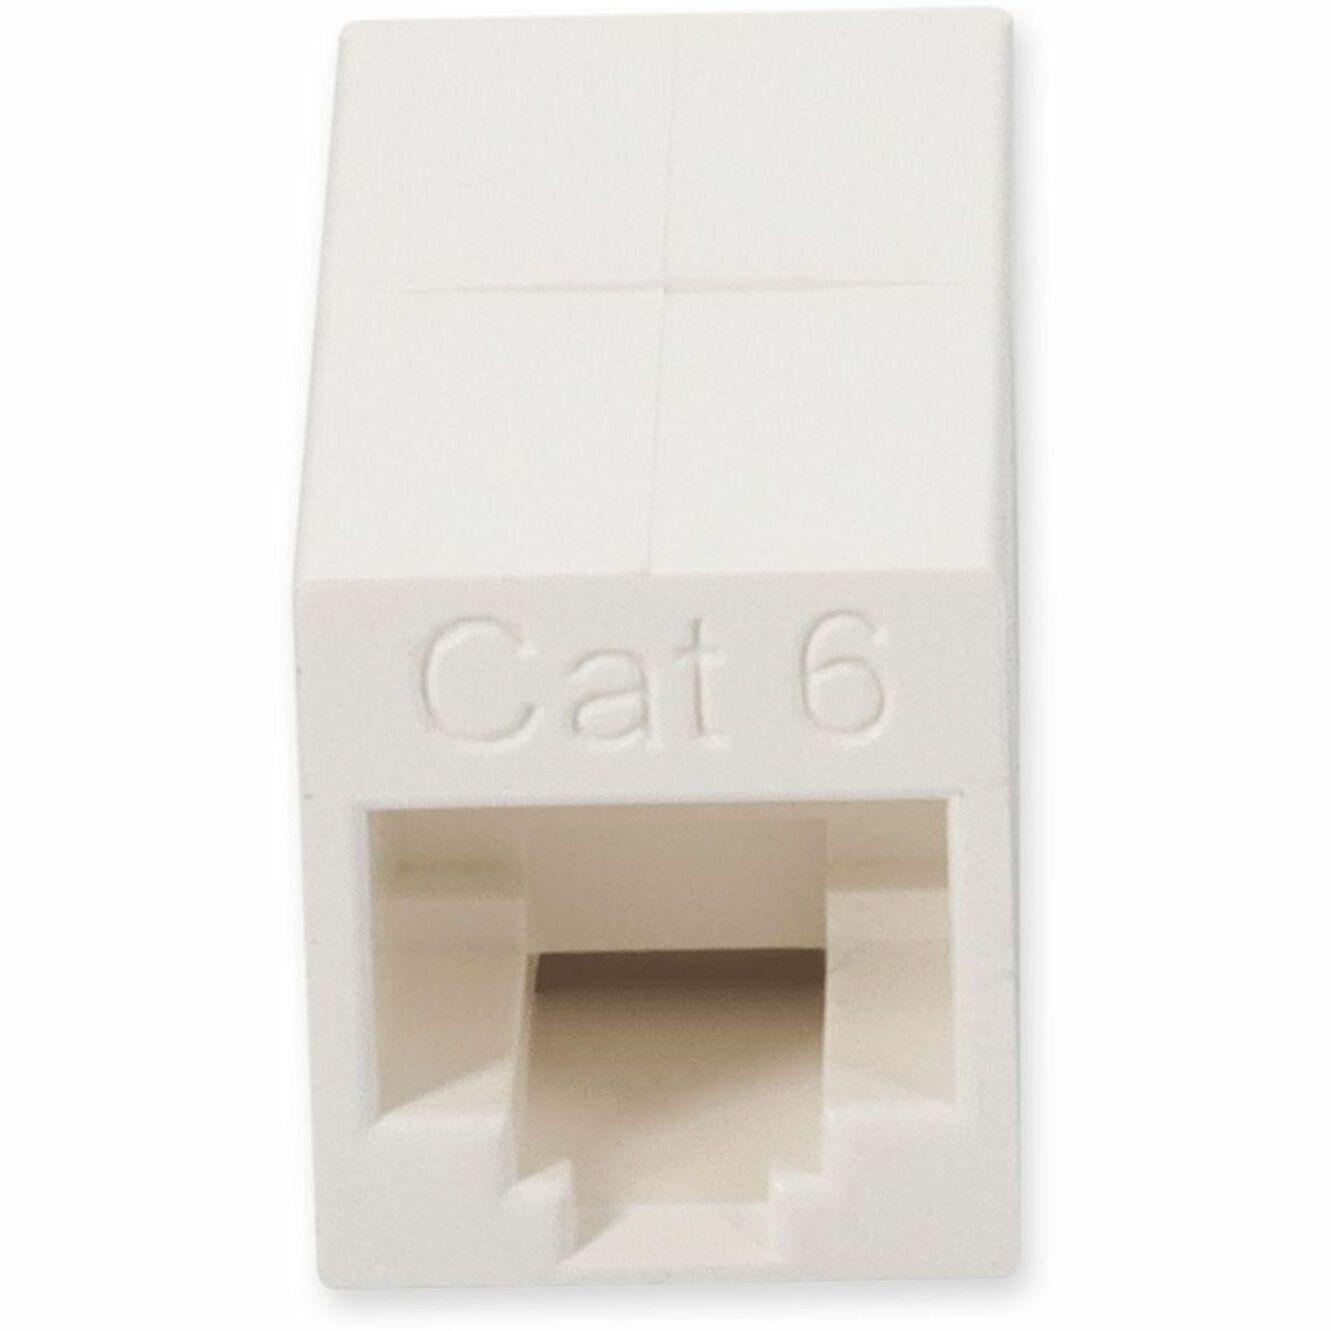 AddOn ADD-CAT6CPLR Cat6 RJ-45 (Female) to RJ-45 (Female) Inline Coupler, Network Adapter